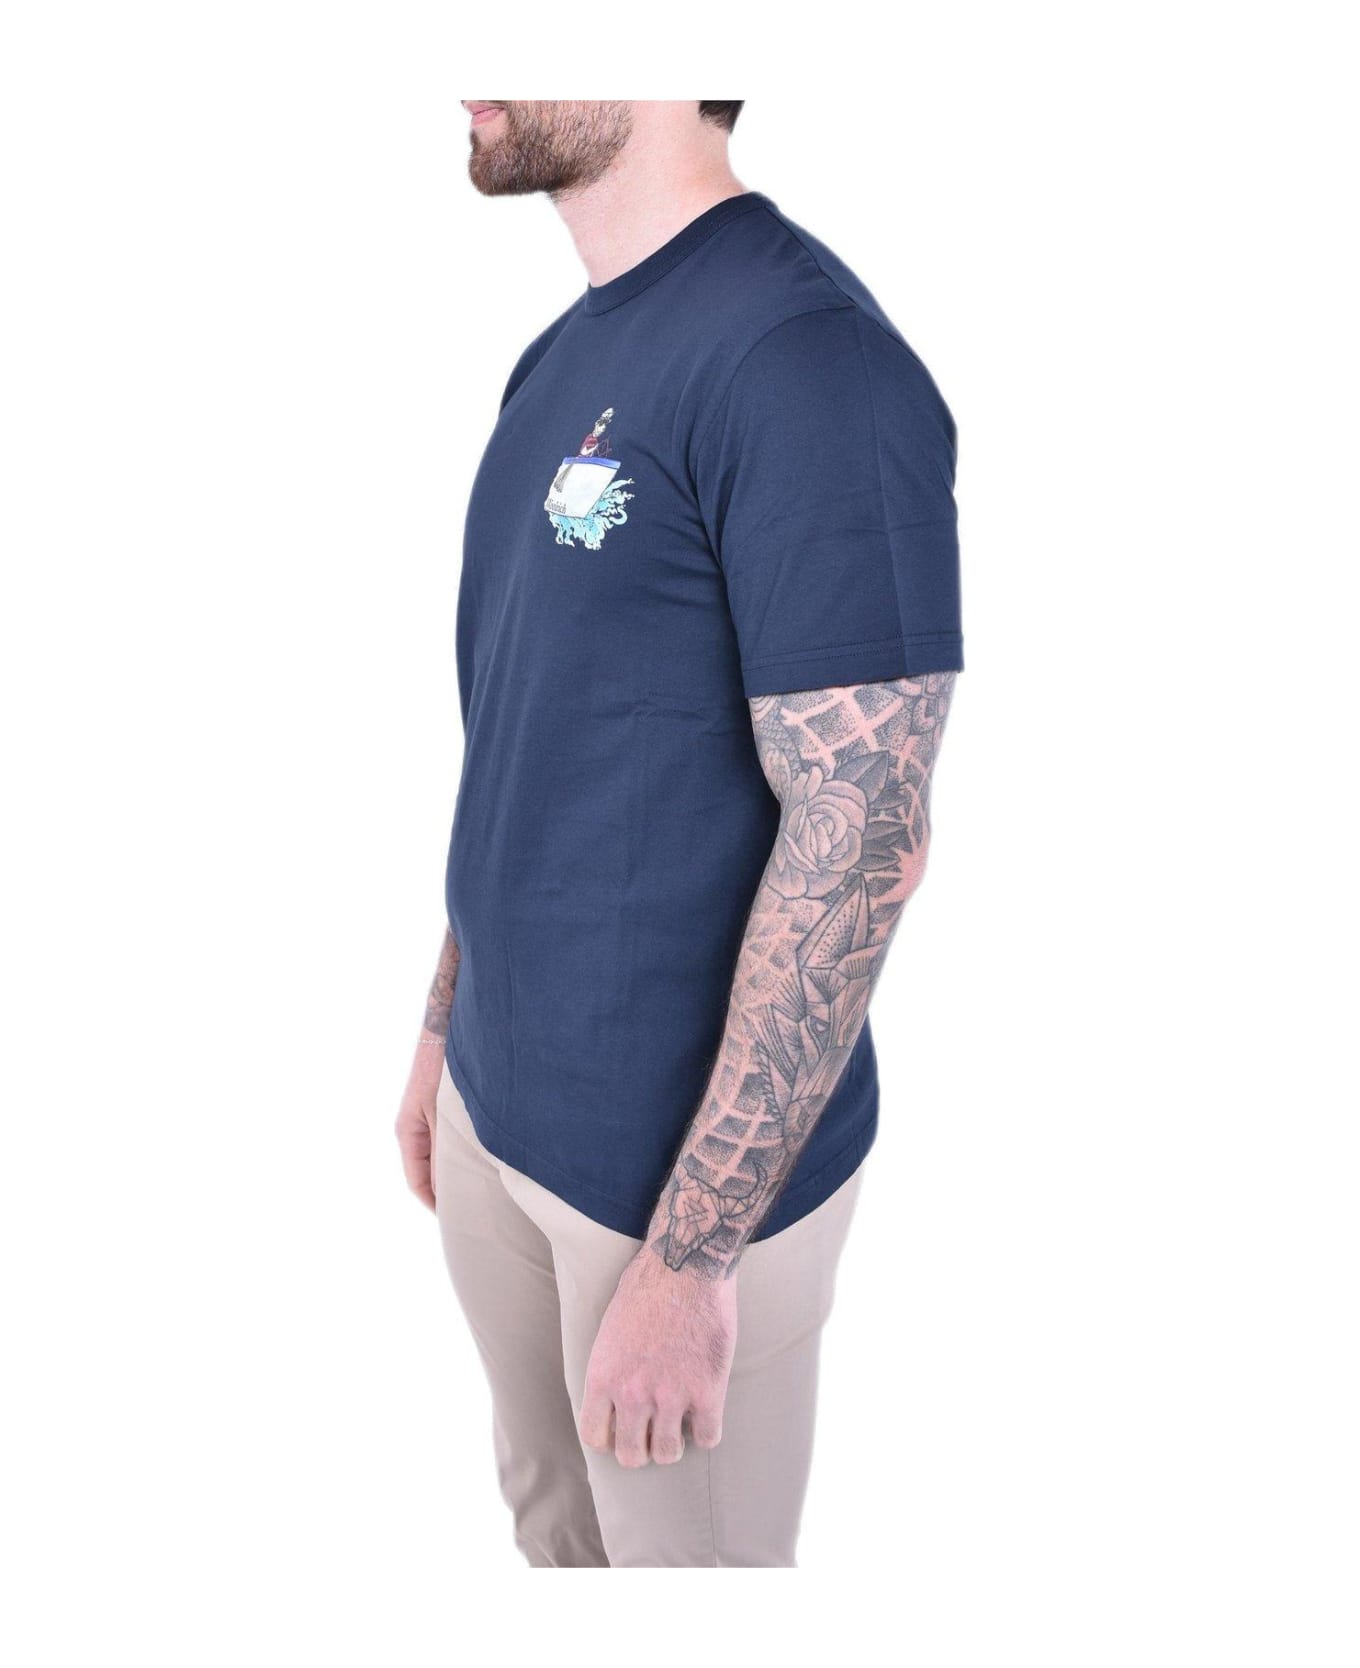 Woolrich Logo Printed Crewneck T-shirt - Melton blue